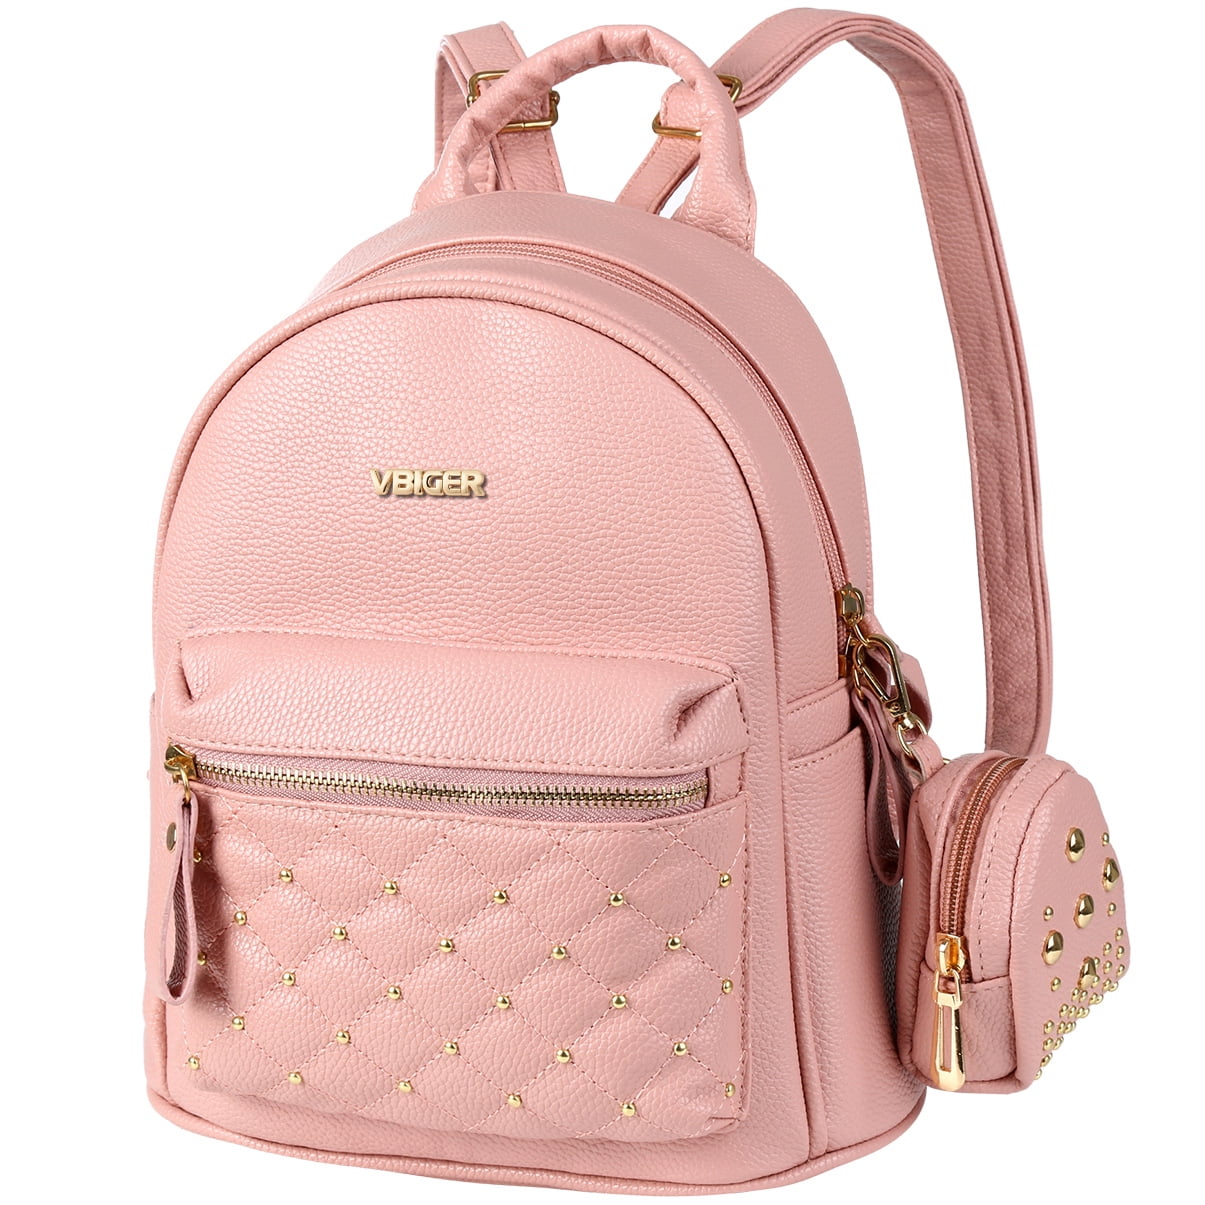 Fashion Women Backpack PU Leather Shoulder School Rucksack Lady Girls Travel Bag 